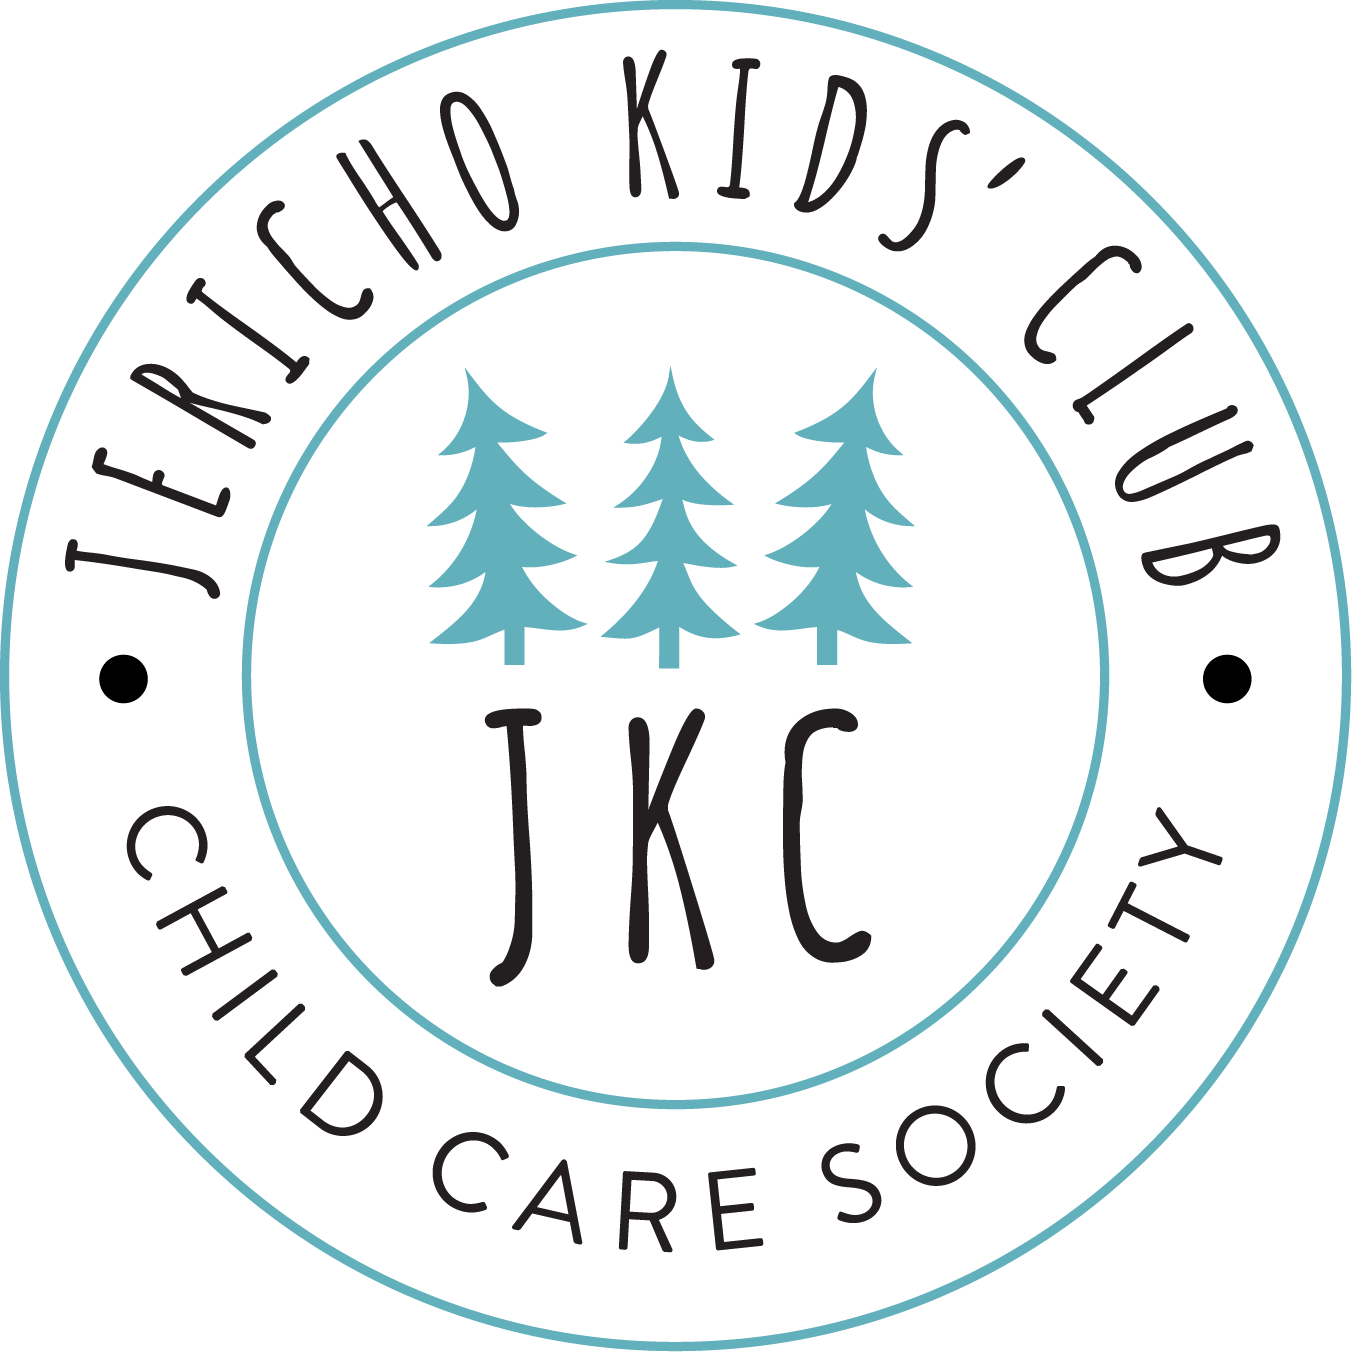 Jericho Kids Club Child Care Society